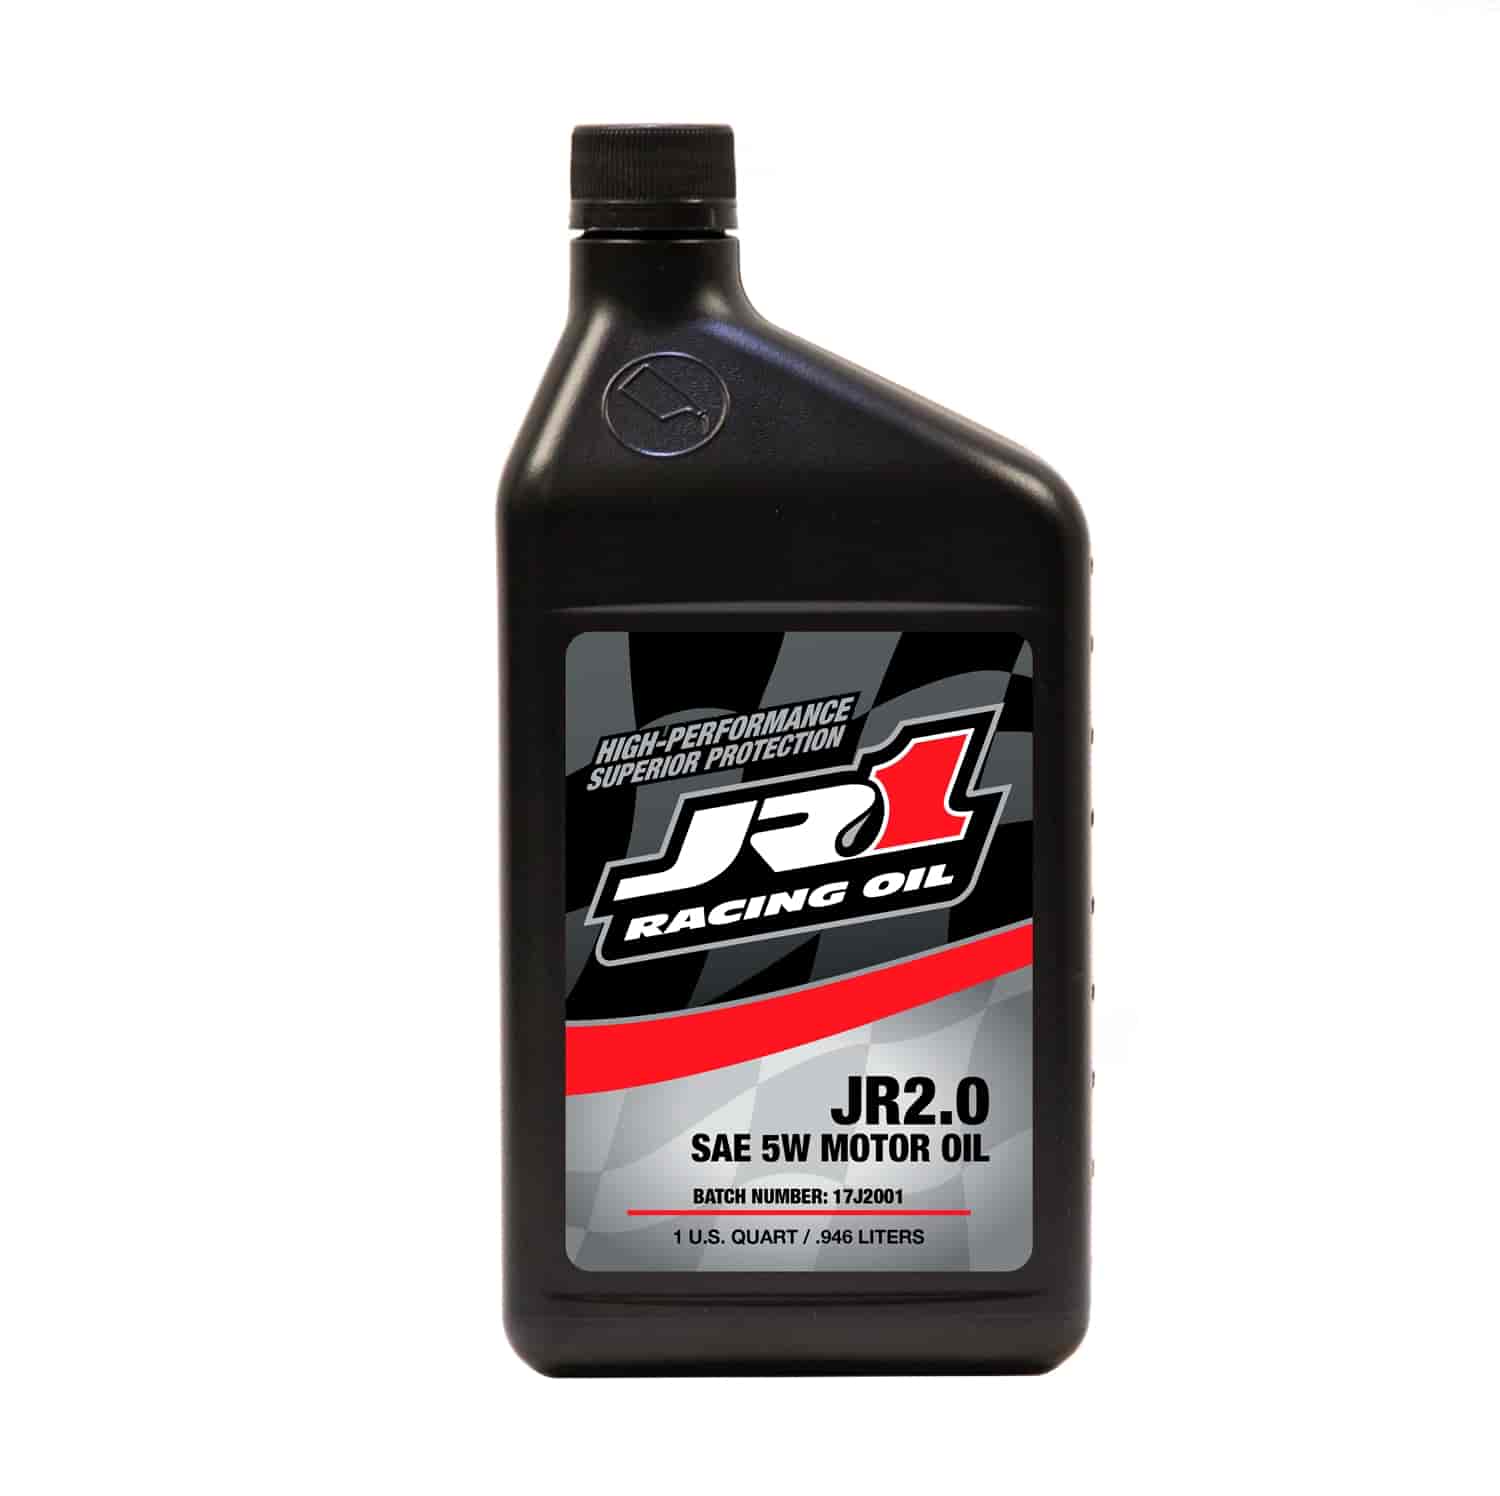 JR 2.0 5W Synthetic Race Oil 1 Quart